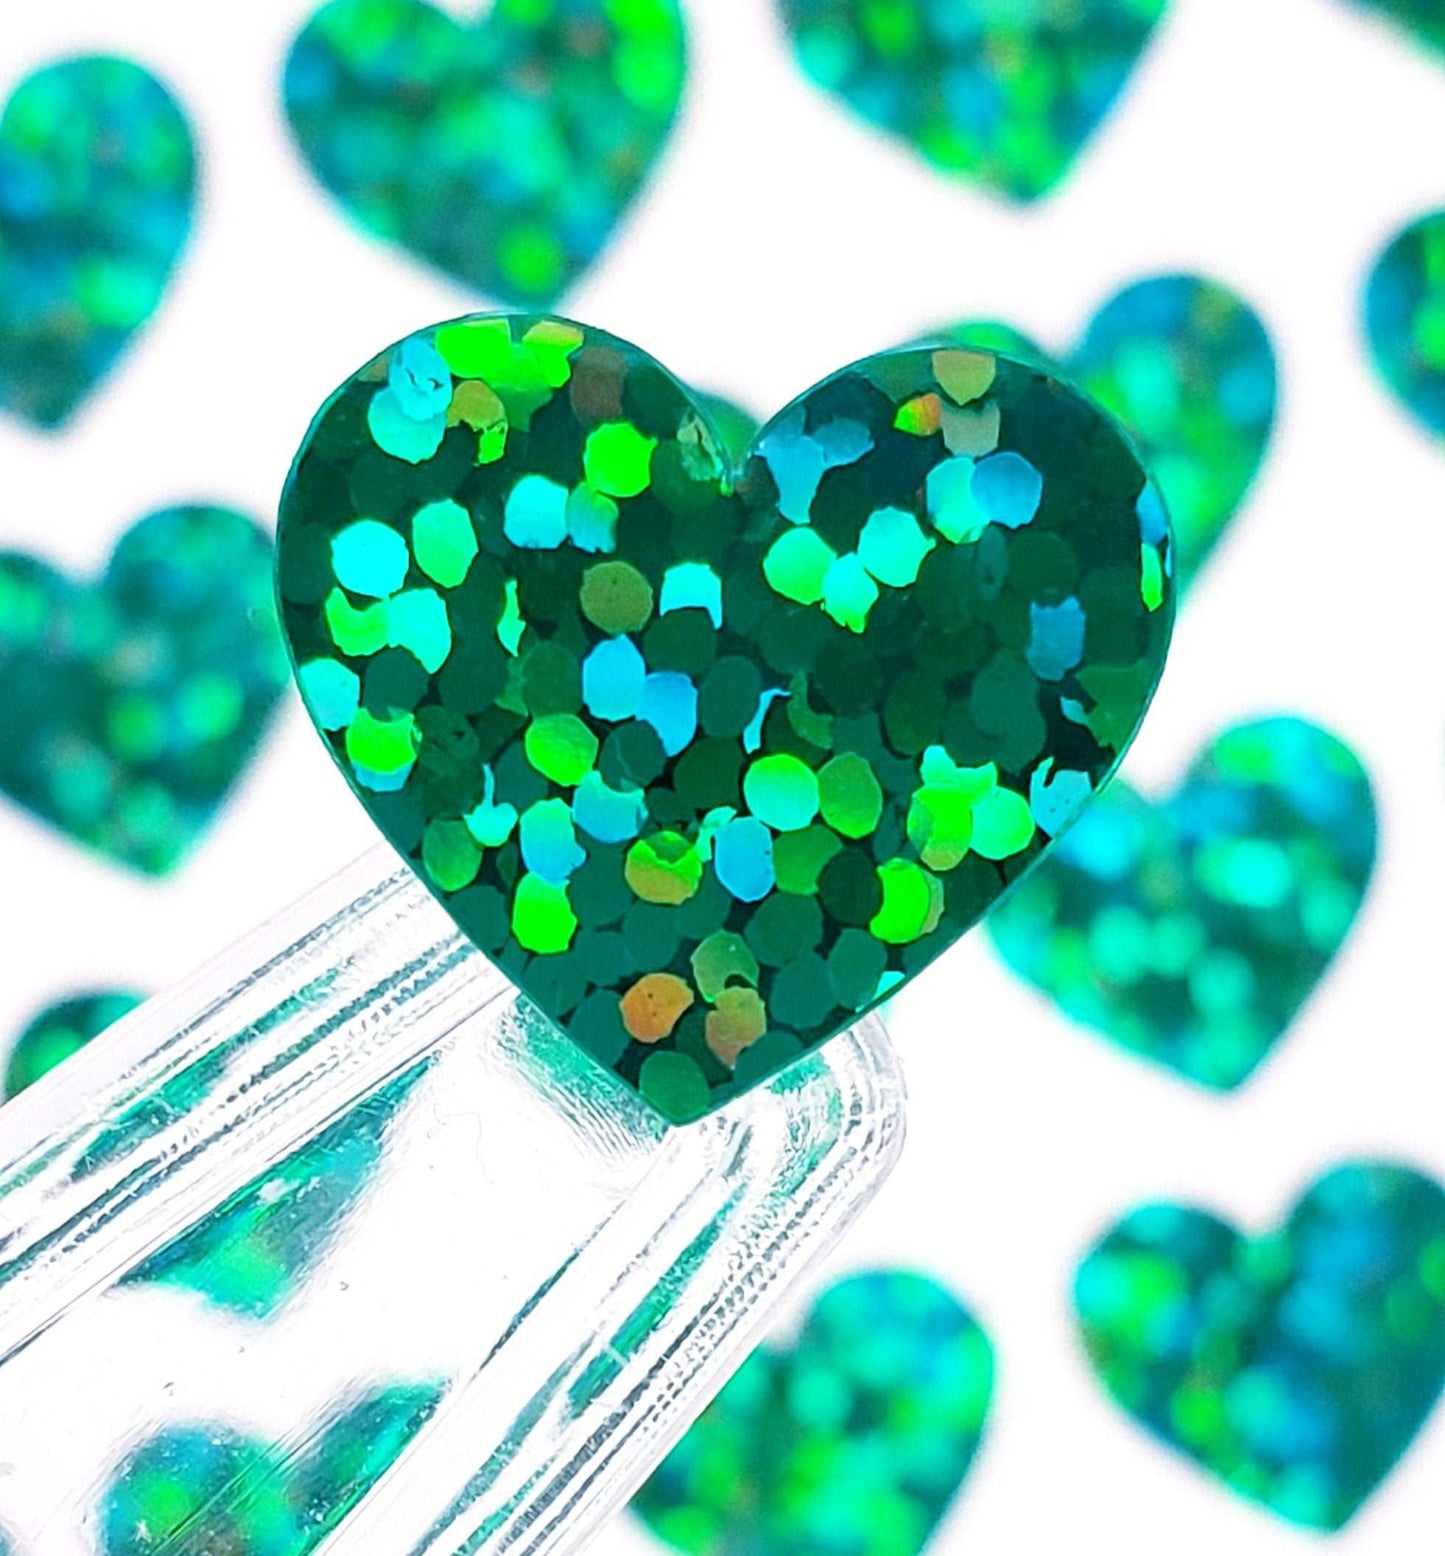 Small Green Hearts Sticker Sheet, set of 285 hearts.